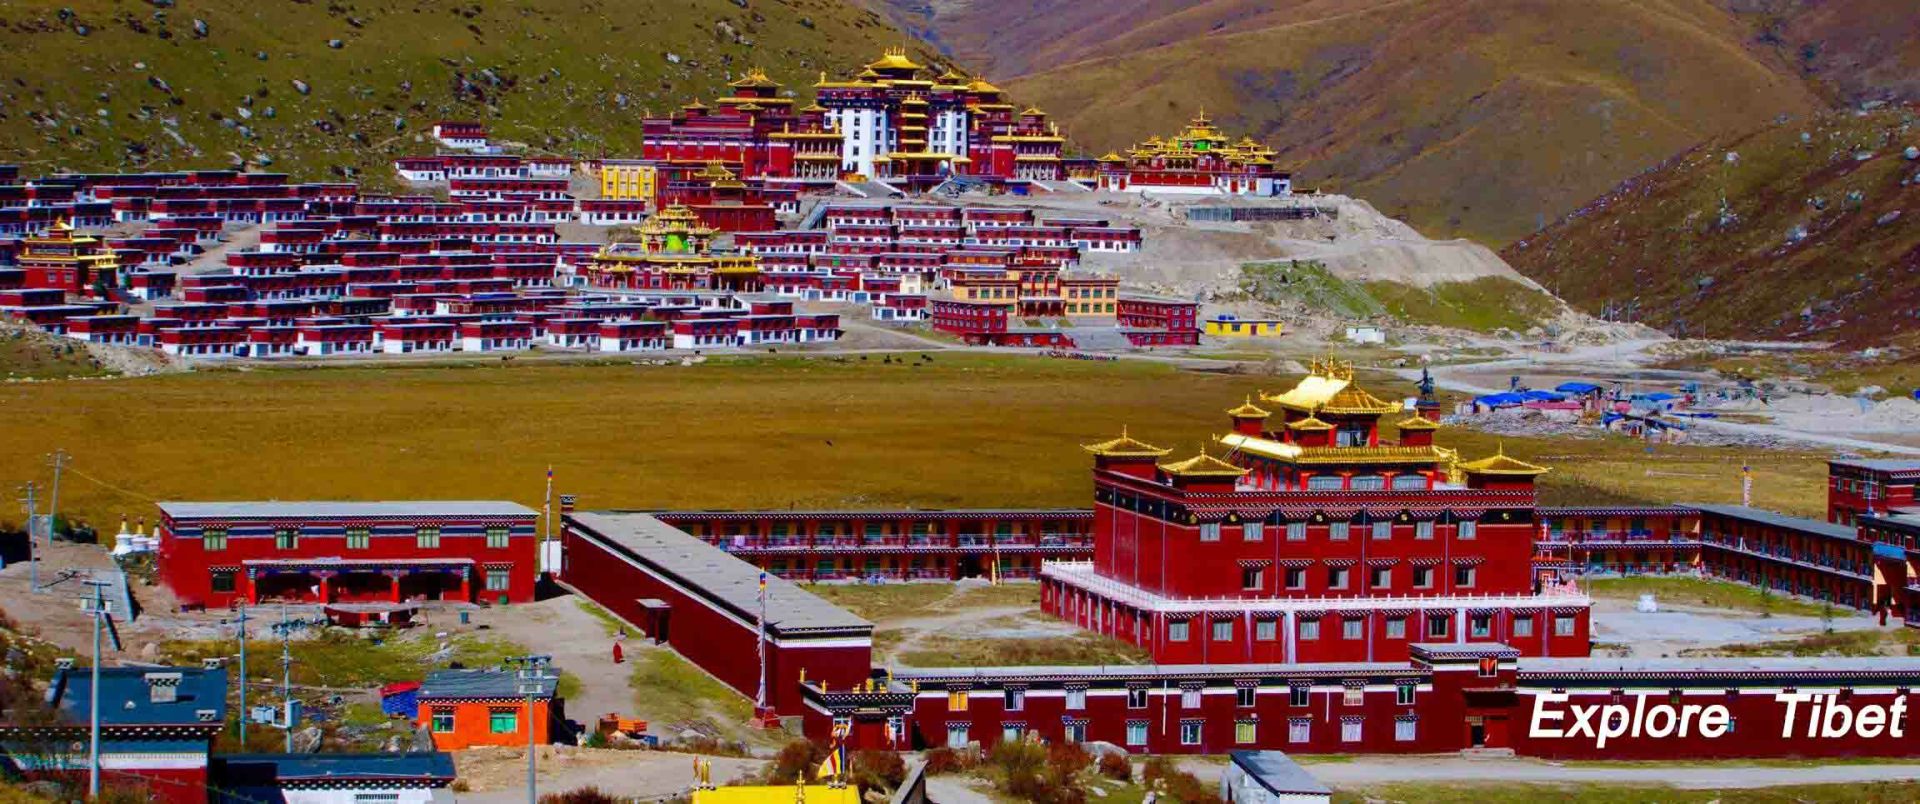 Dzogchen Monastery -Explore Tibet